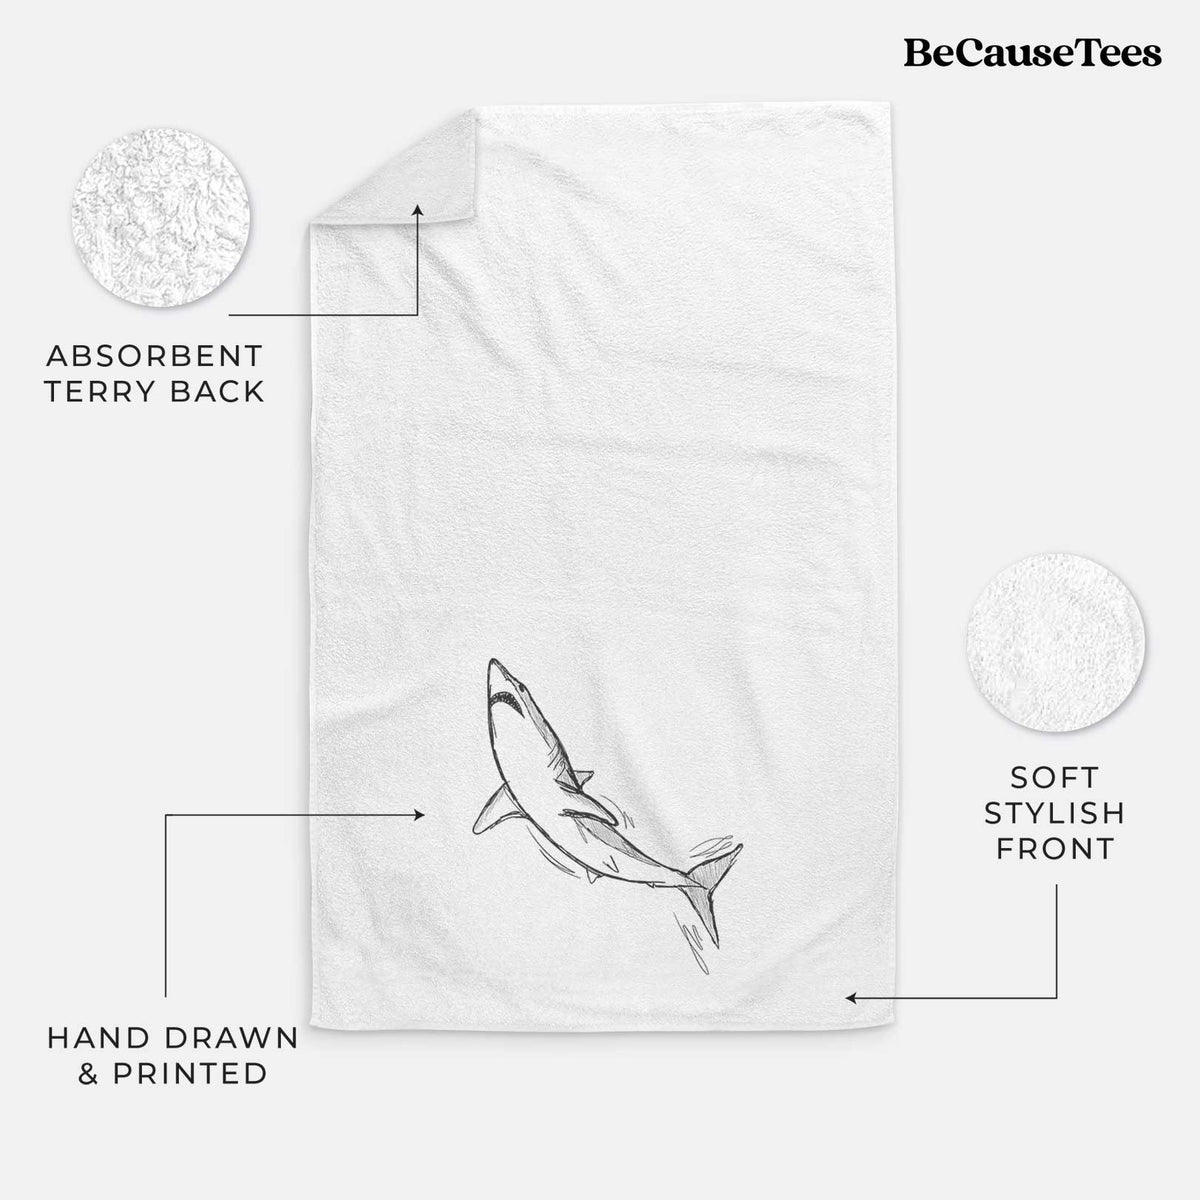 Shortfin Mako Shark Hand Towel